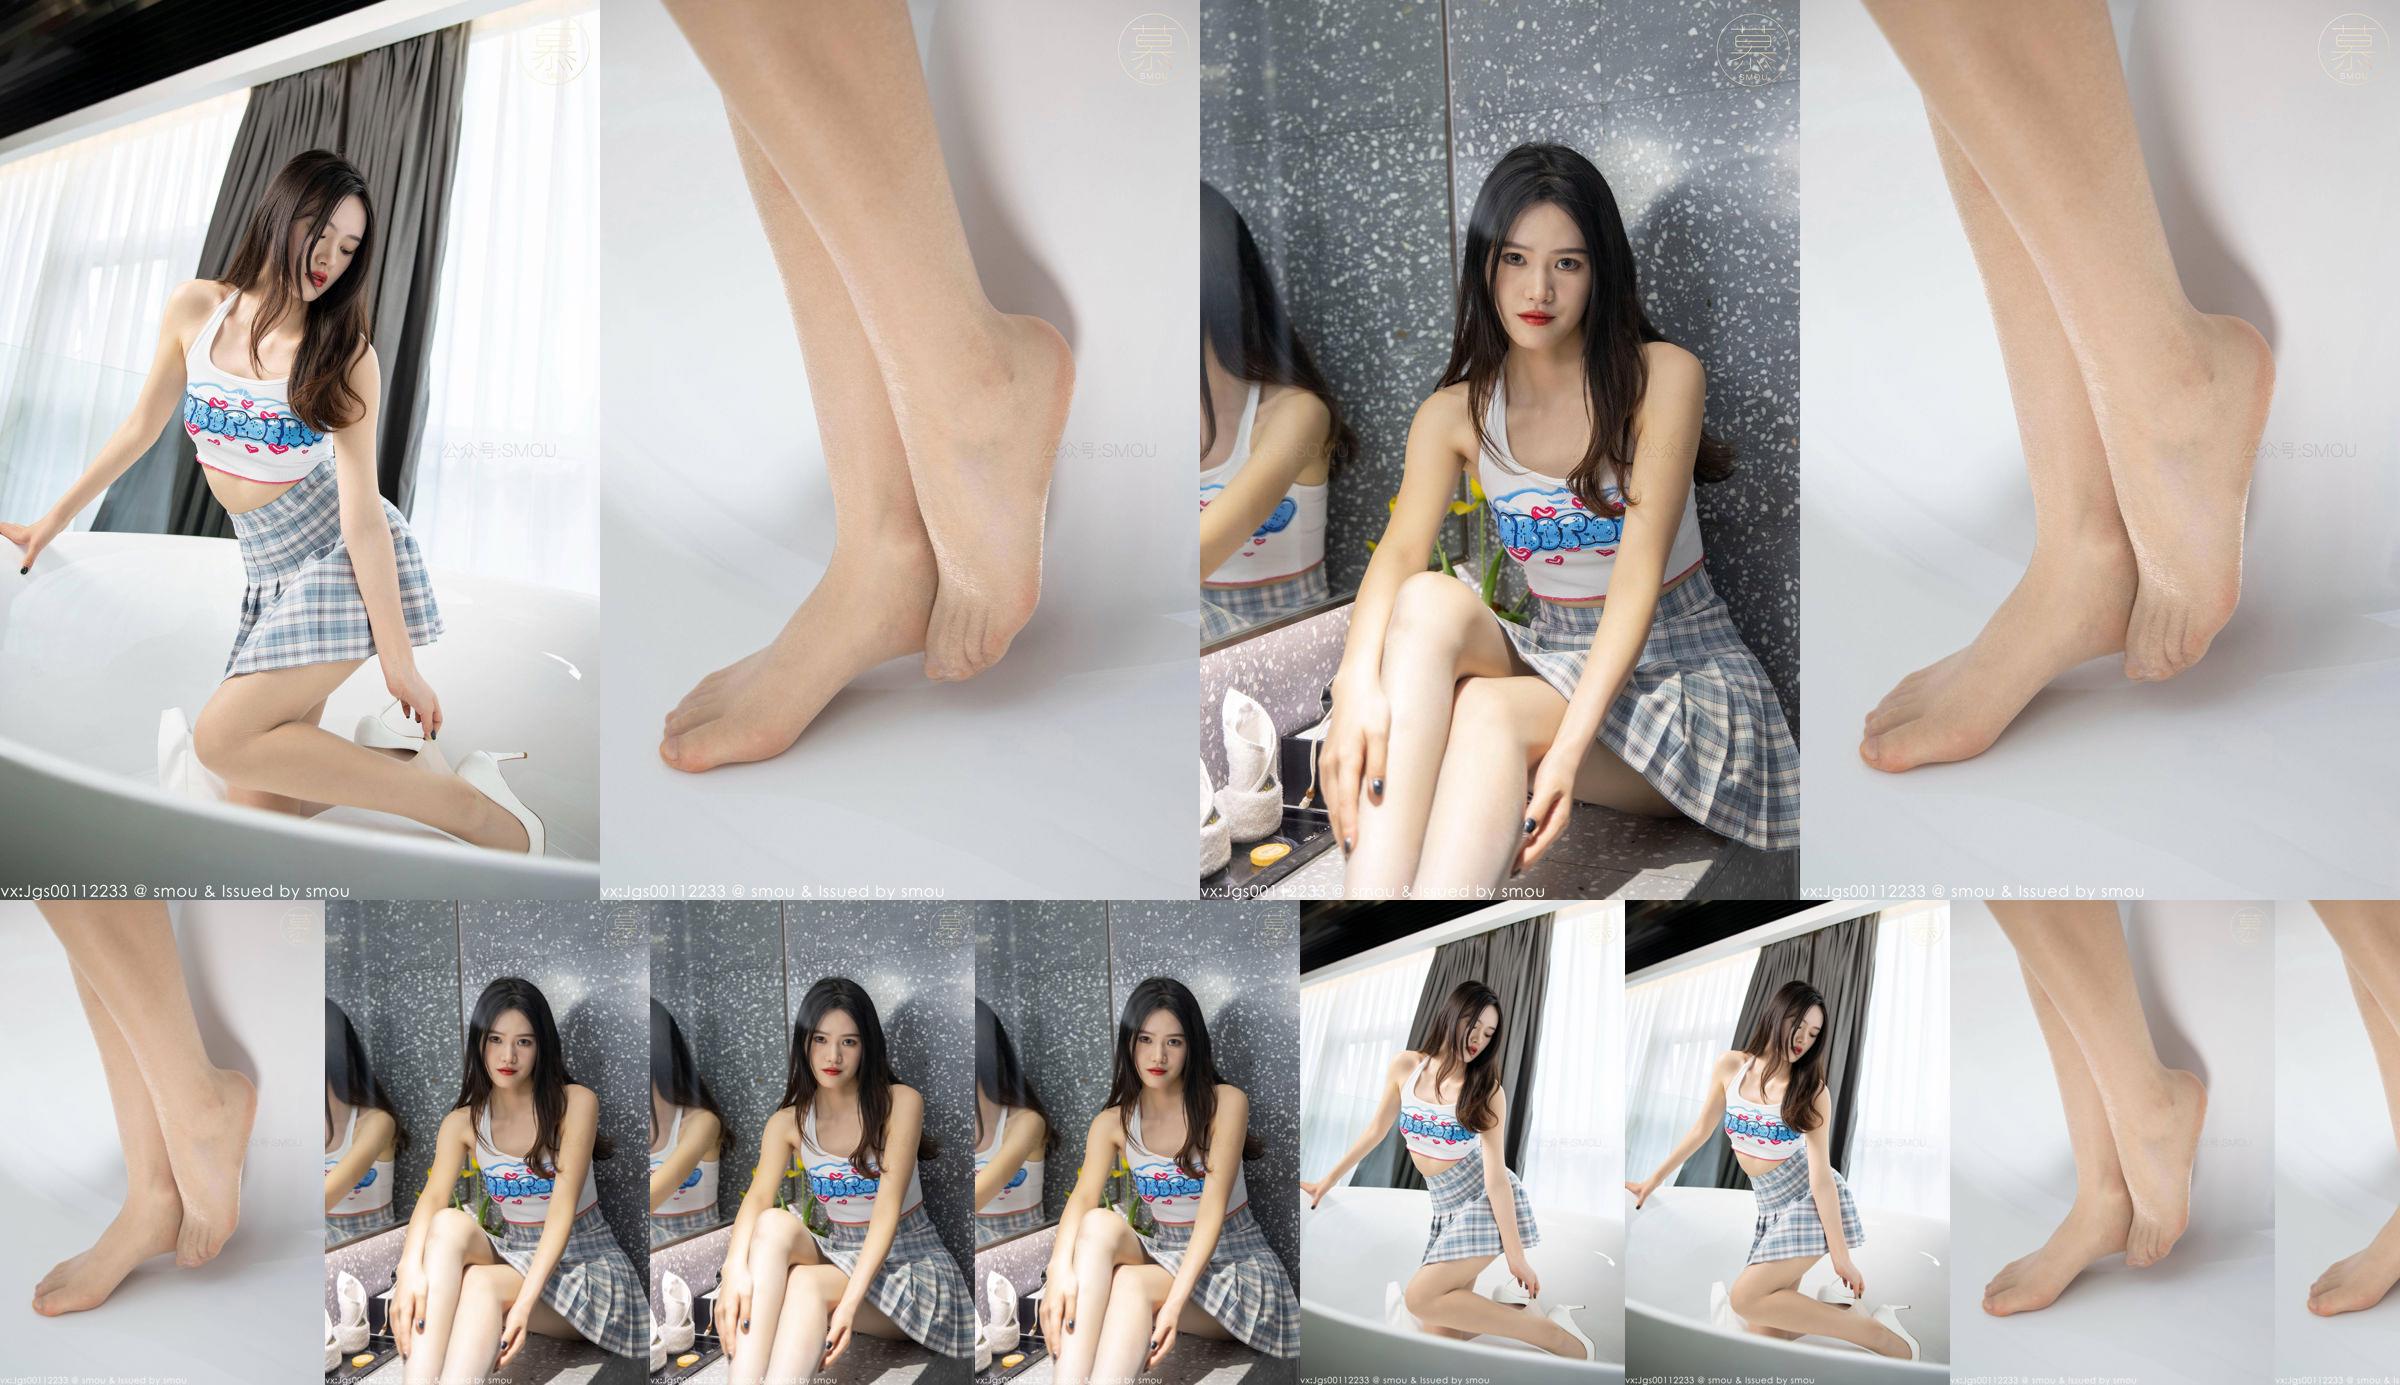 [SMOU] Honey Series M014 Model Baru Weiwei Pantyhose Penutup Kaki Yang Indah No.18cb2c Halaman 2